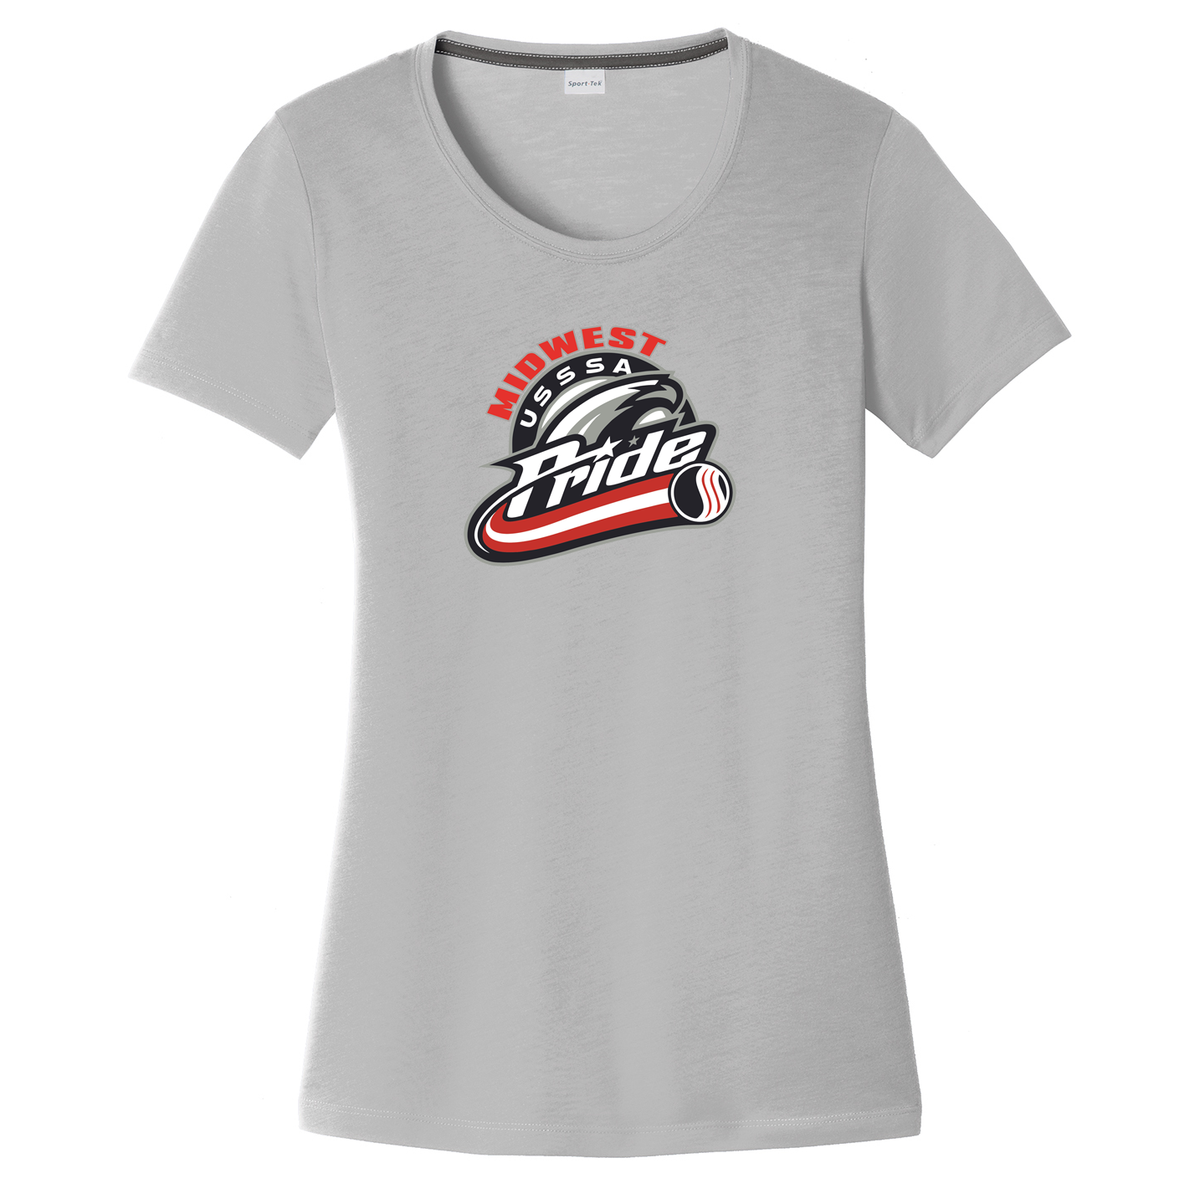 Midwest Pride Women's CottonTouch Performance T-Shirt